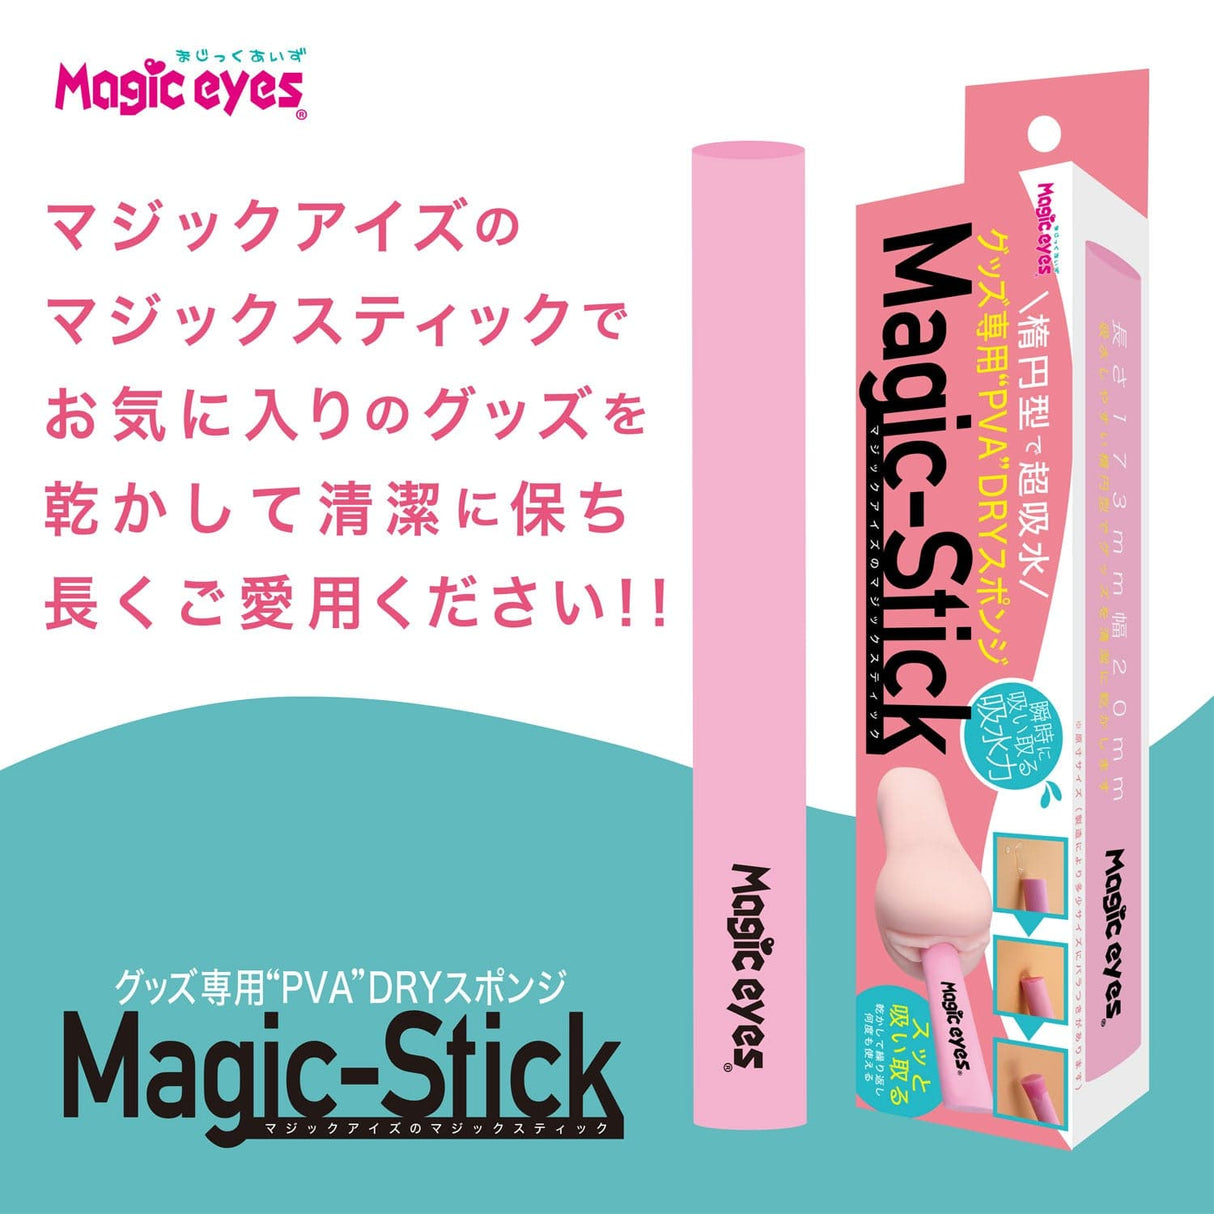 Magic Eyes - PVA Onahole Dry Magic Stick    Accessories